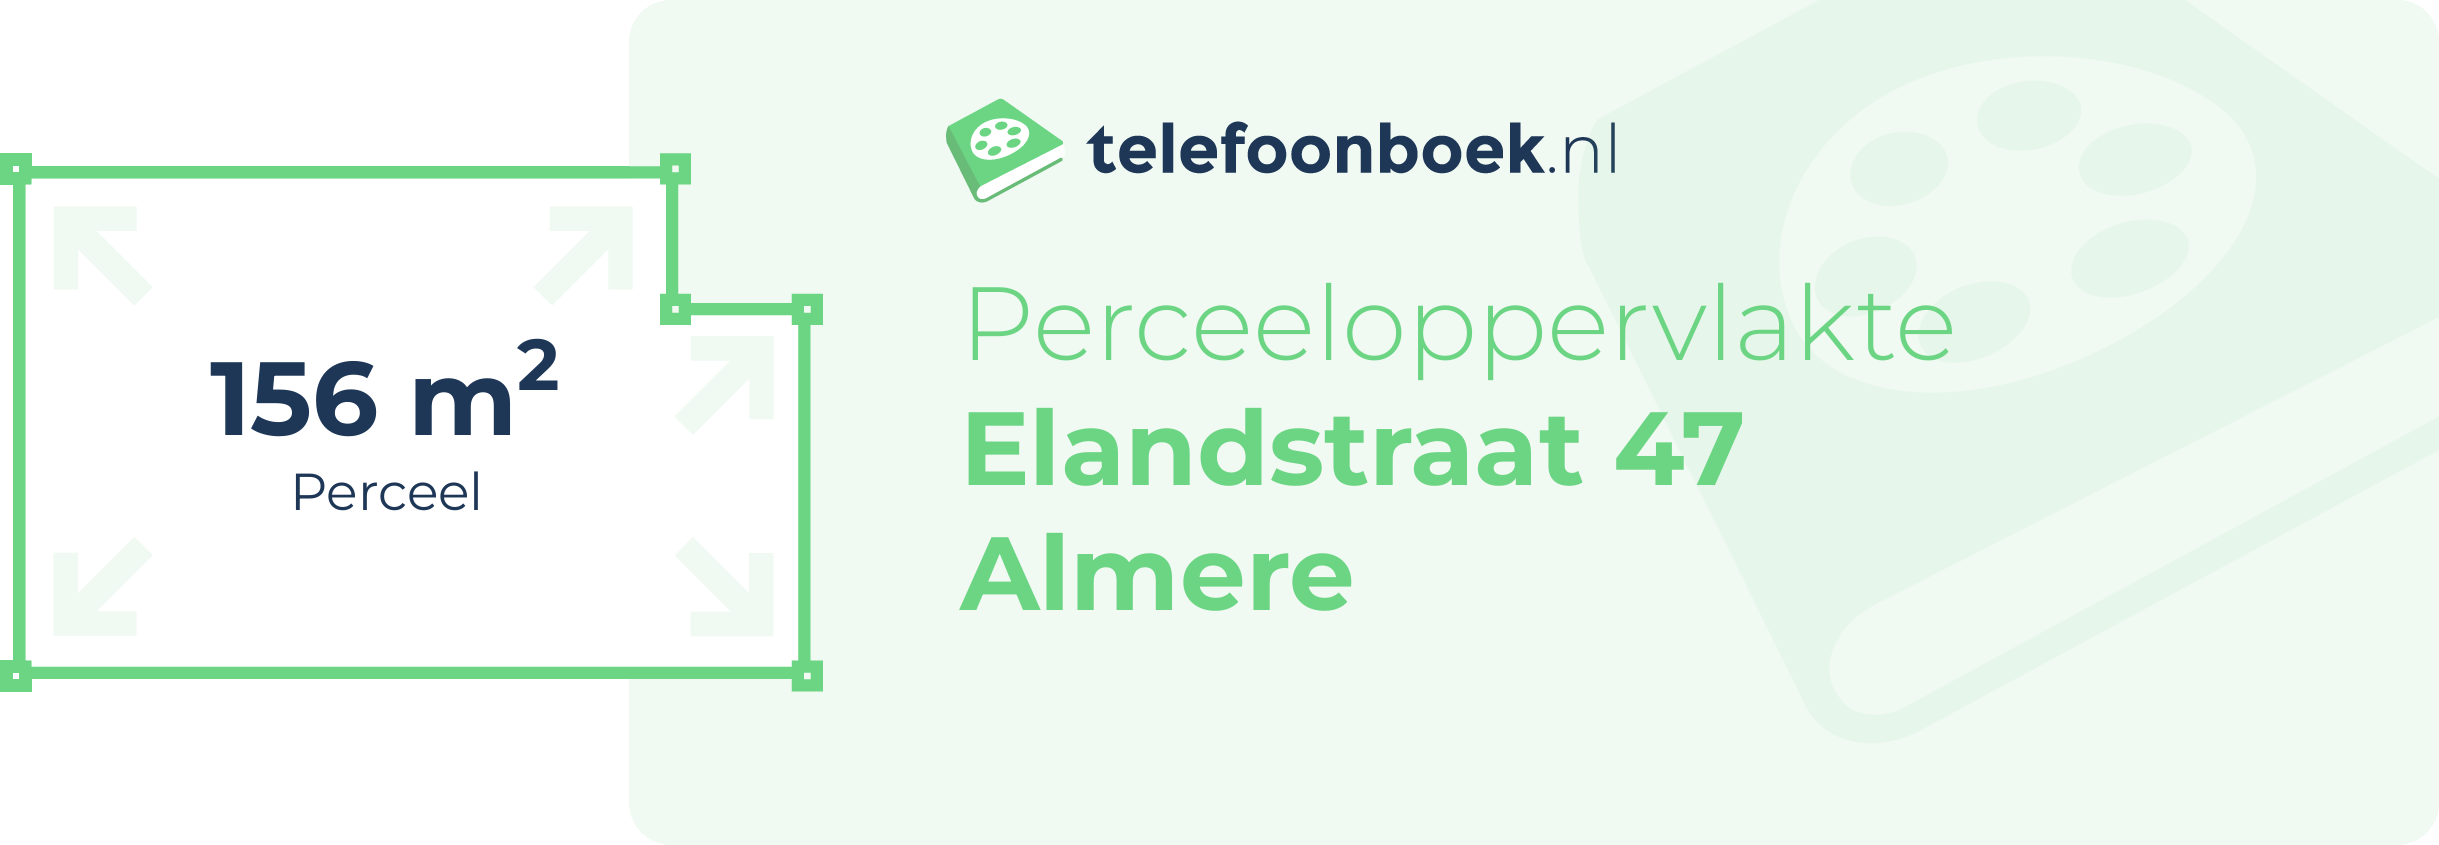 Perceeloppervlakte Elandstraat 47 Almere